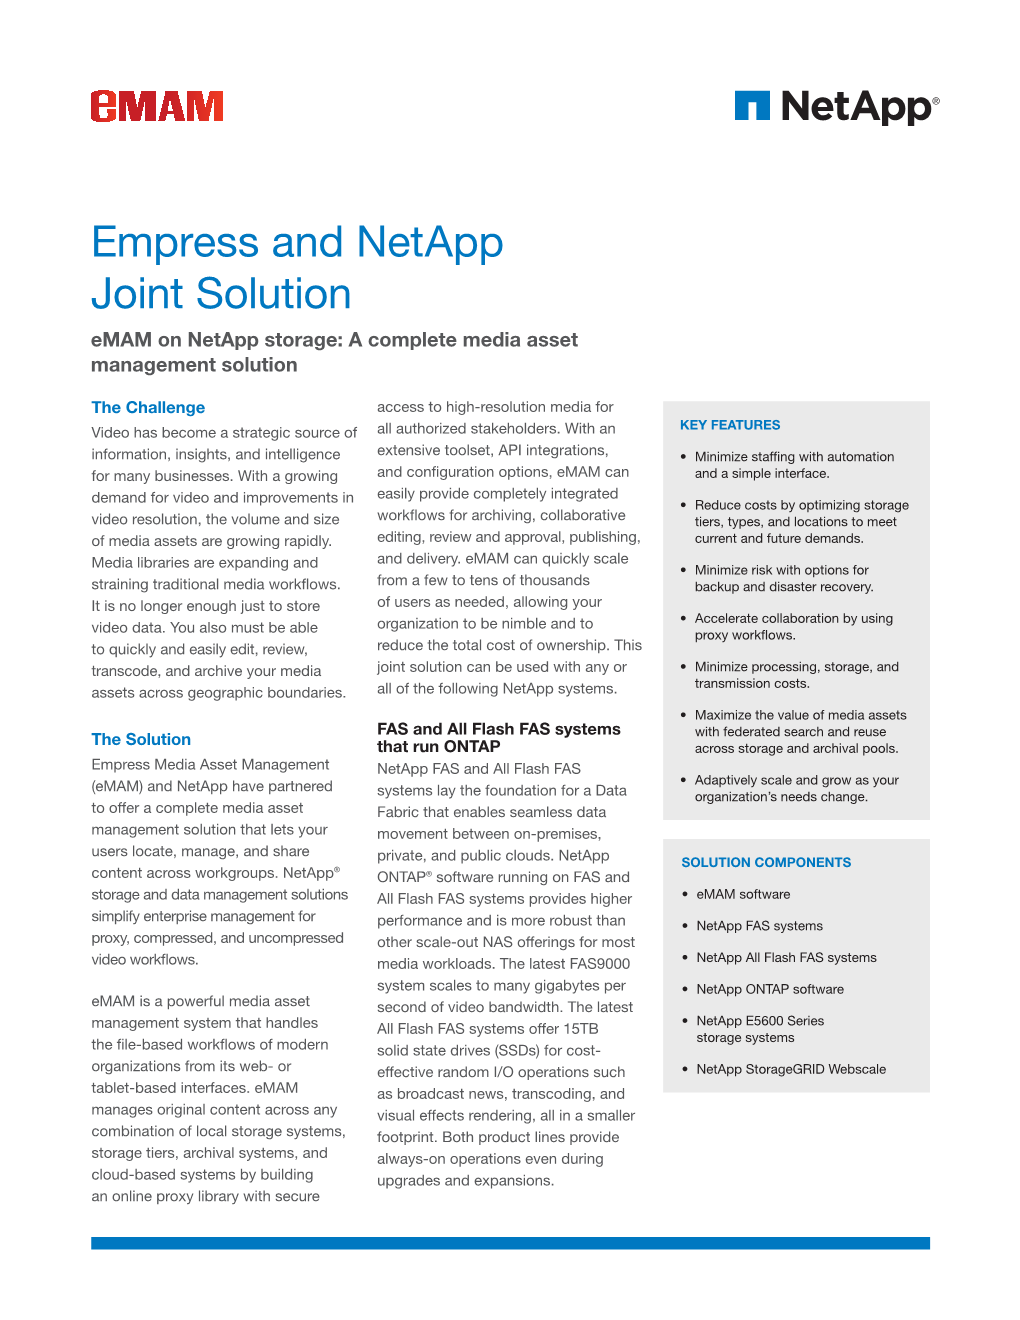 Emam on Netapp Storage: a Complete Media Asset Management Solution